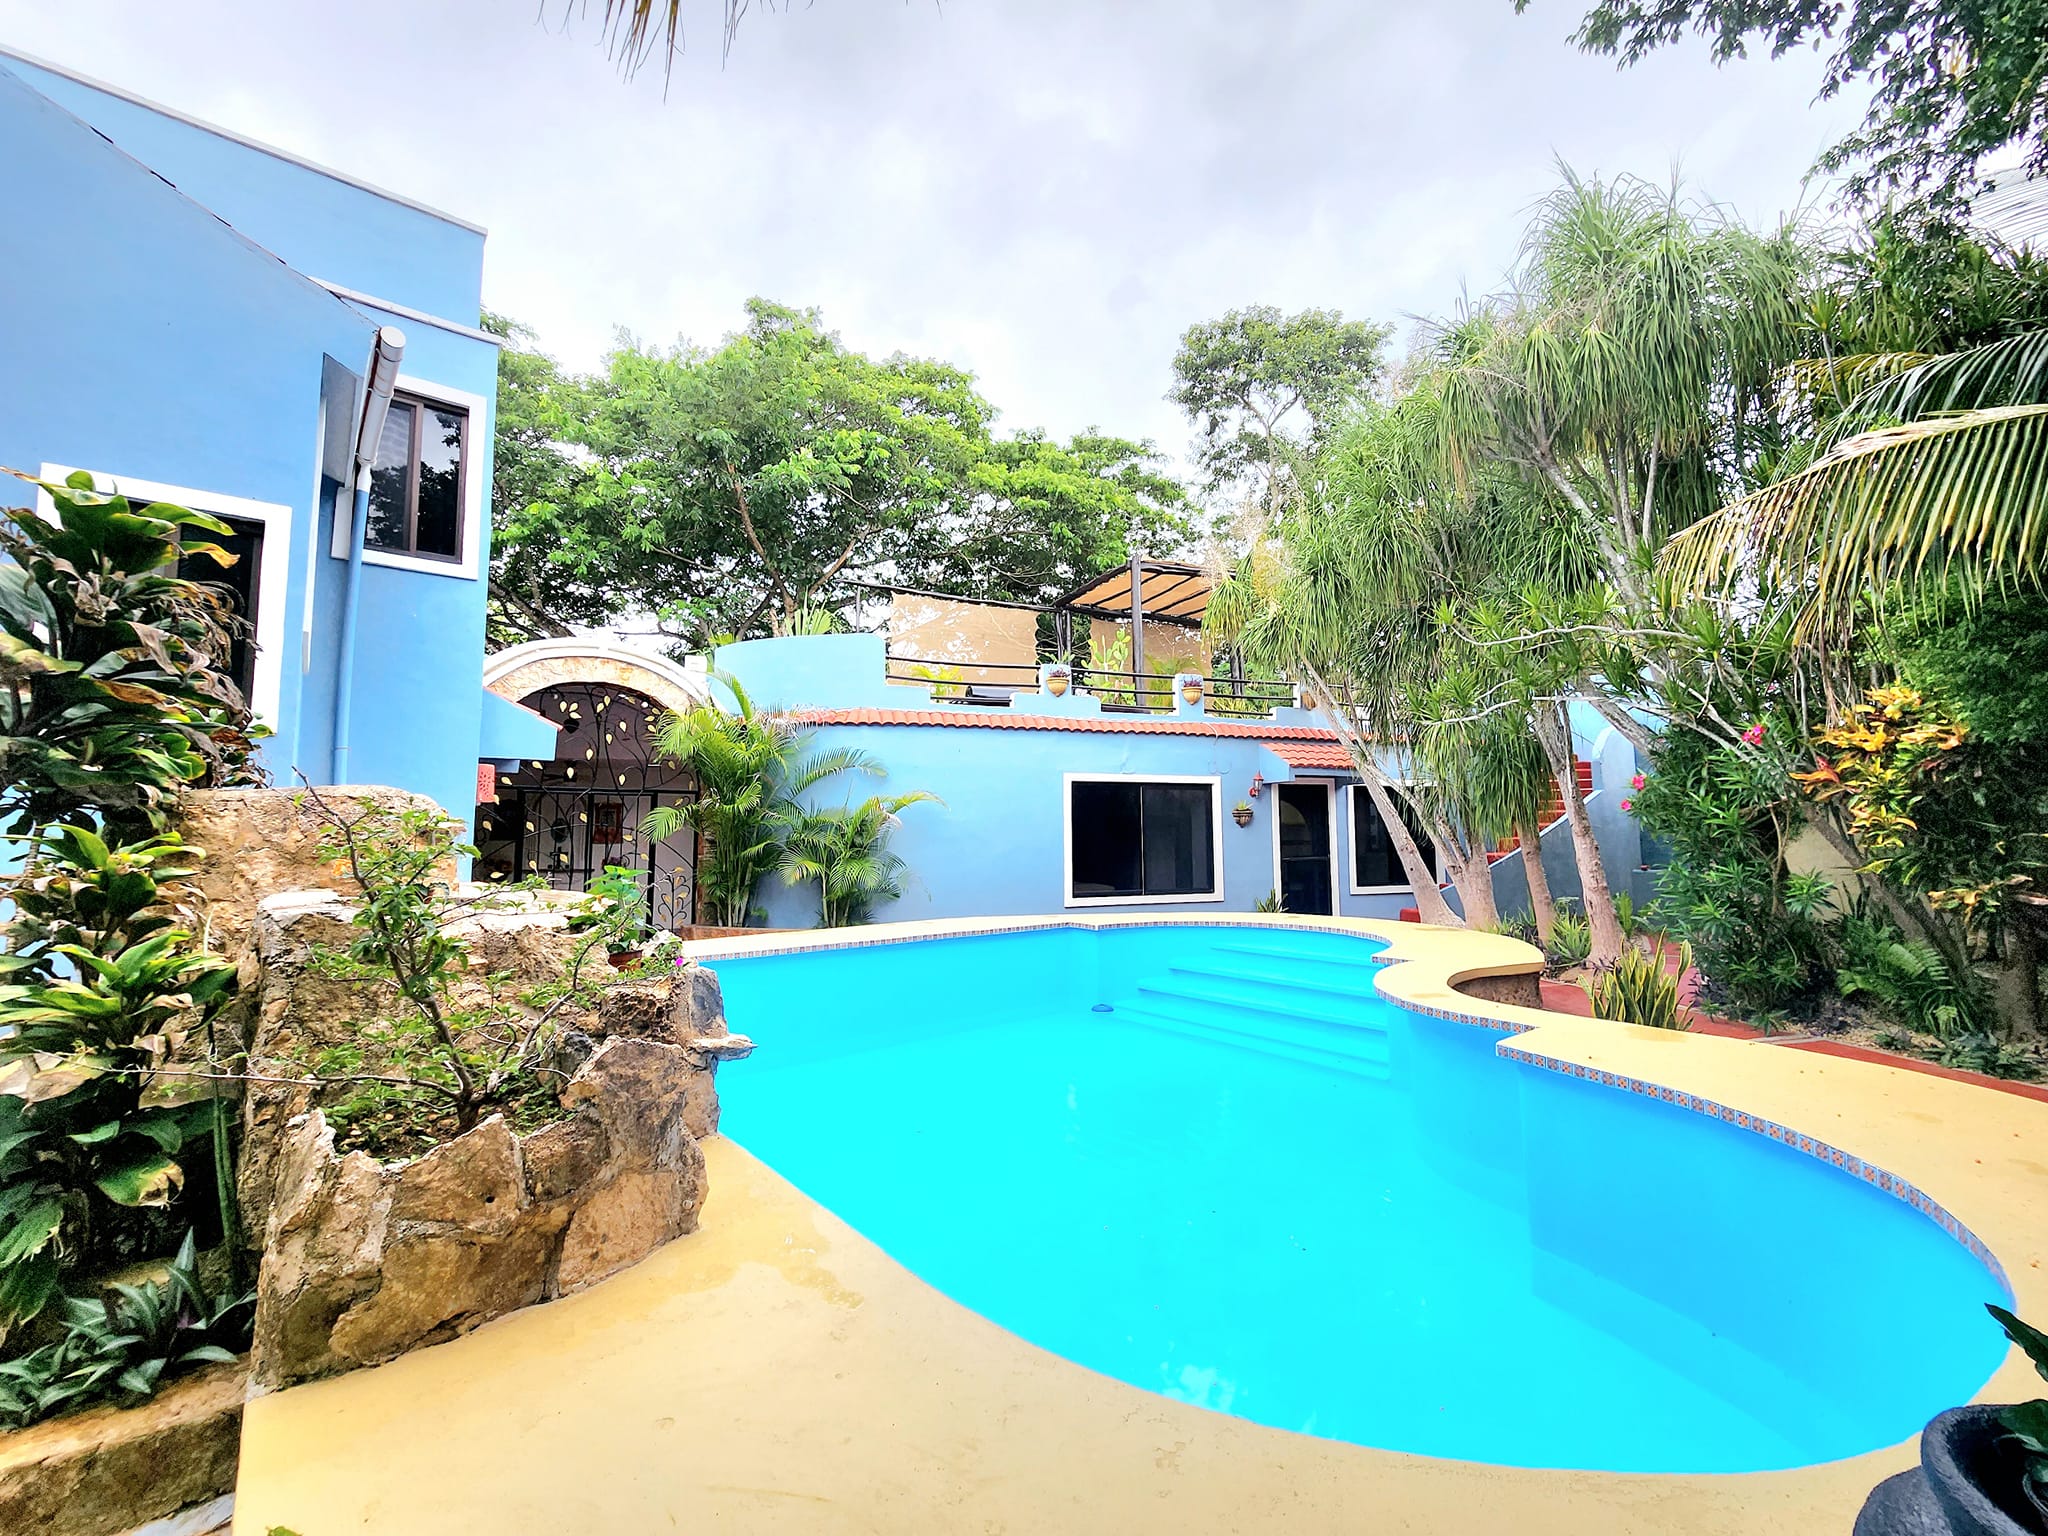 Cholul Small Hacienda 4/4+ Pool $459K